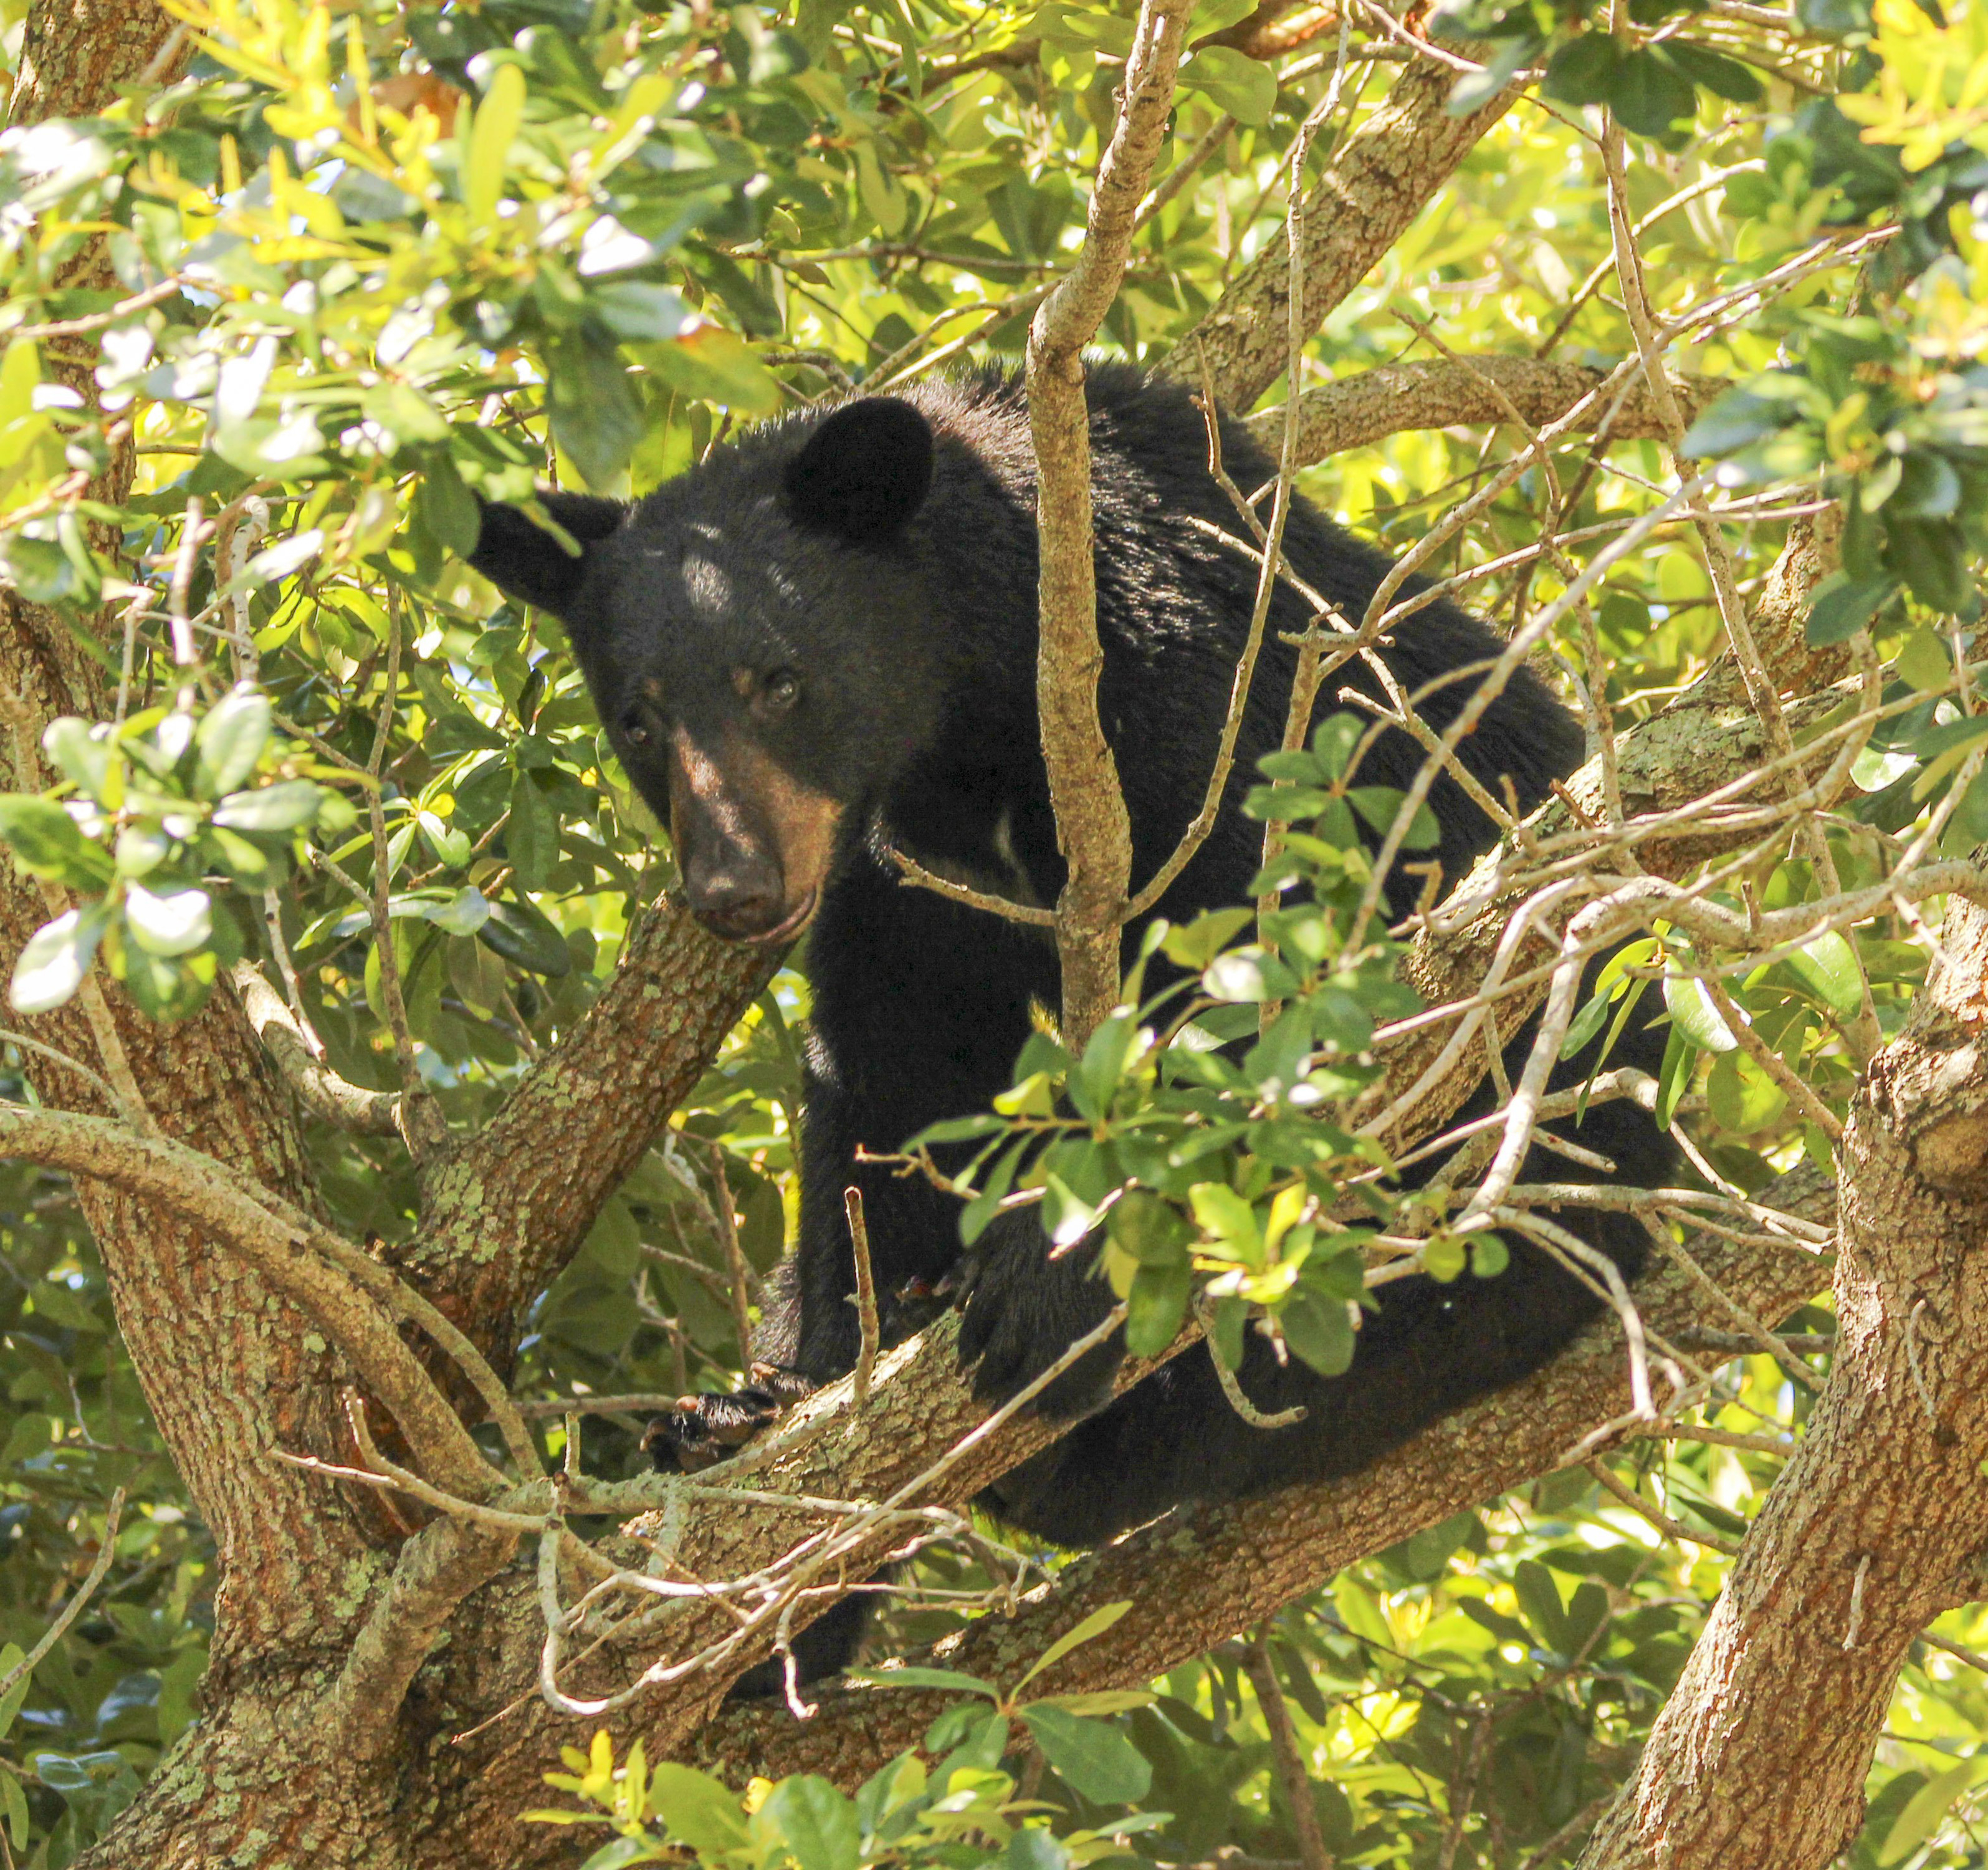 A bear in a tree